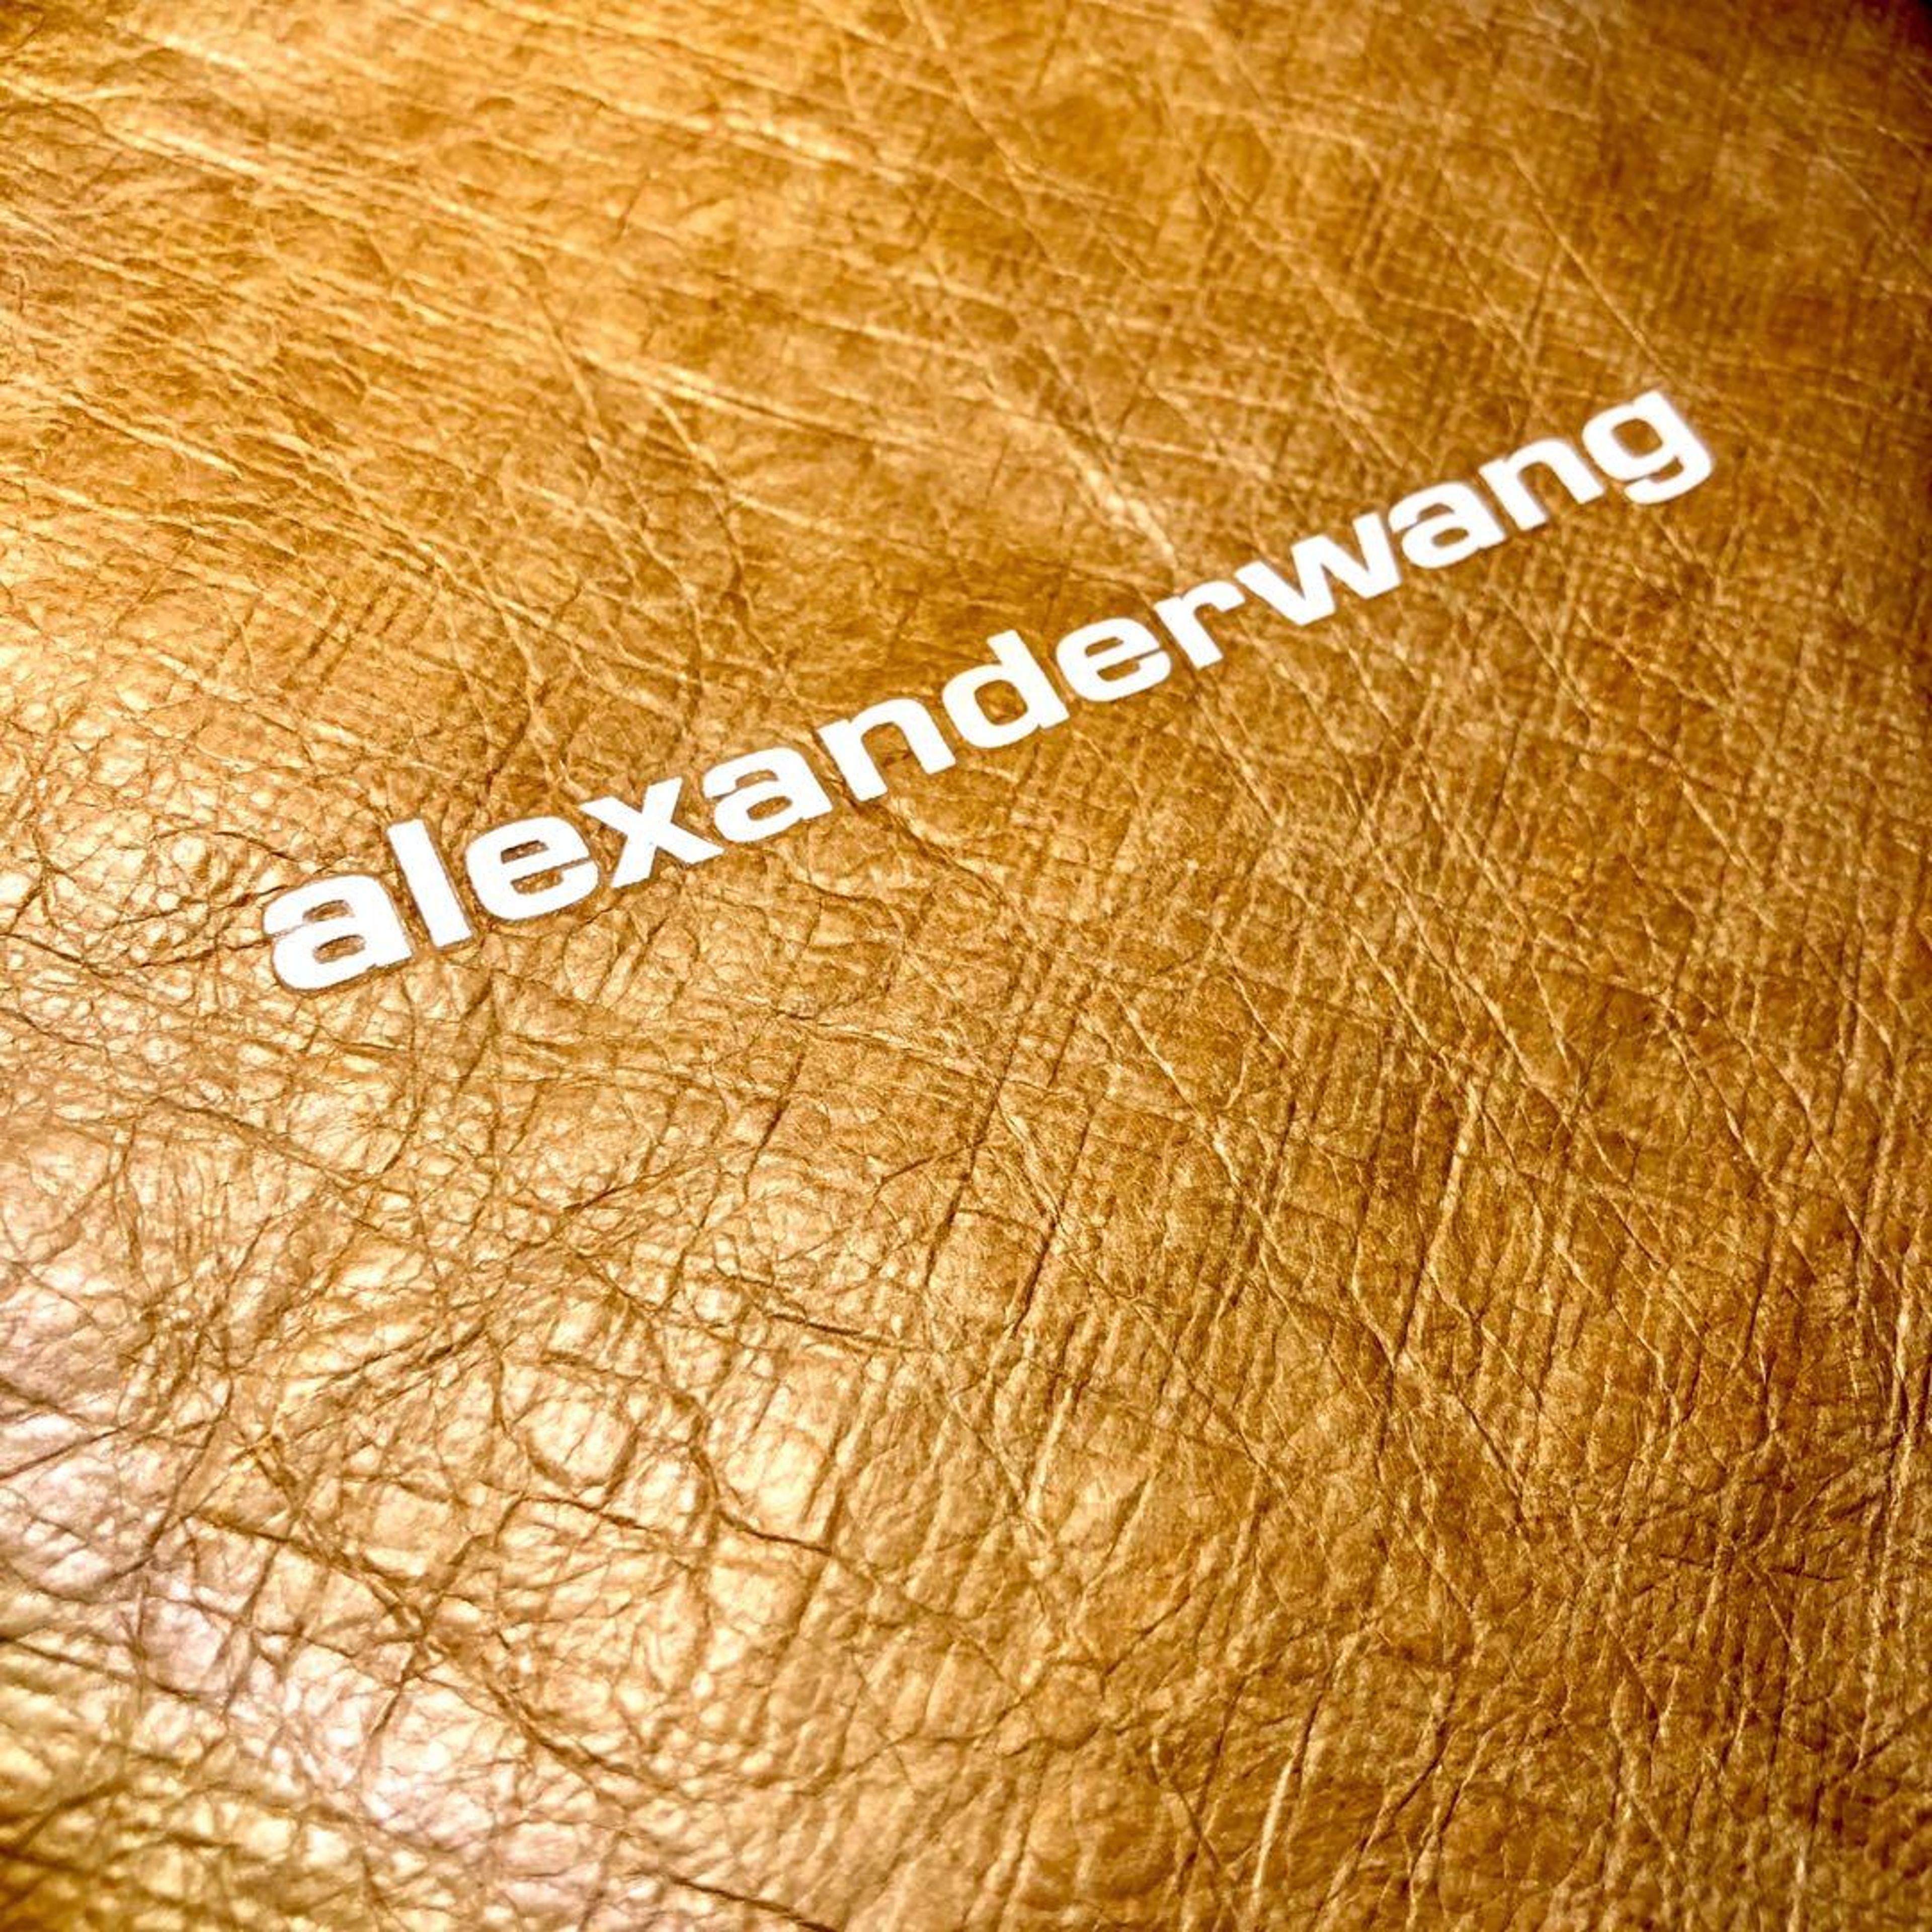 Alternate View 2 of ALEXANDERWANG X McDonald’s handbag